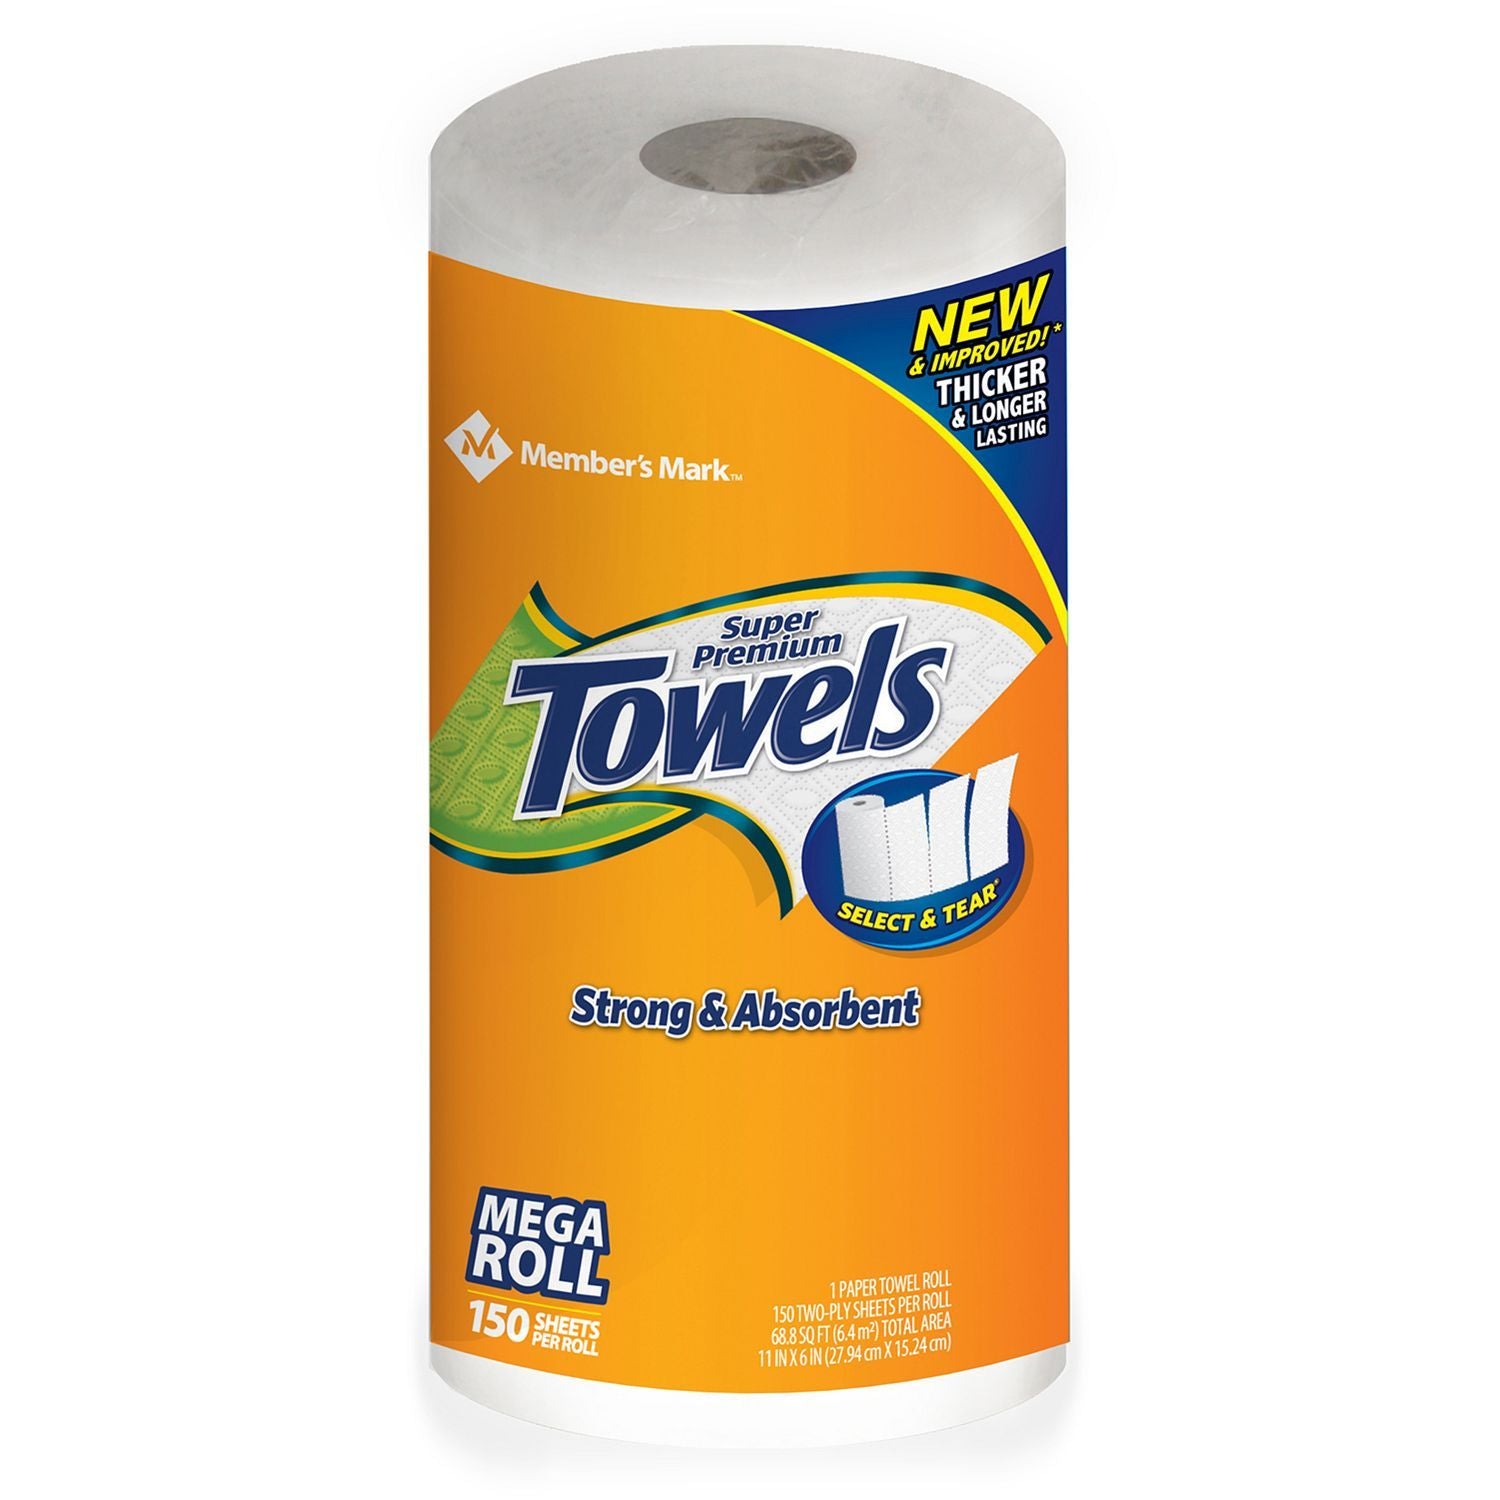 bvi>Member's Mark Paper Towels - Mega Roll ( 150 sheets )